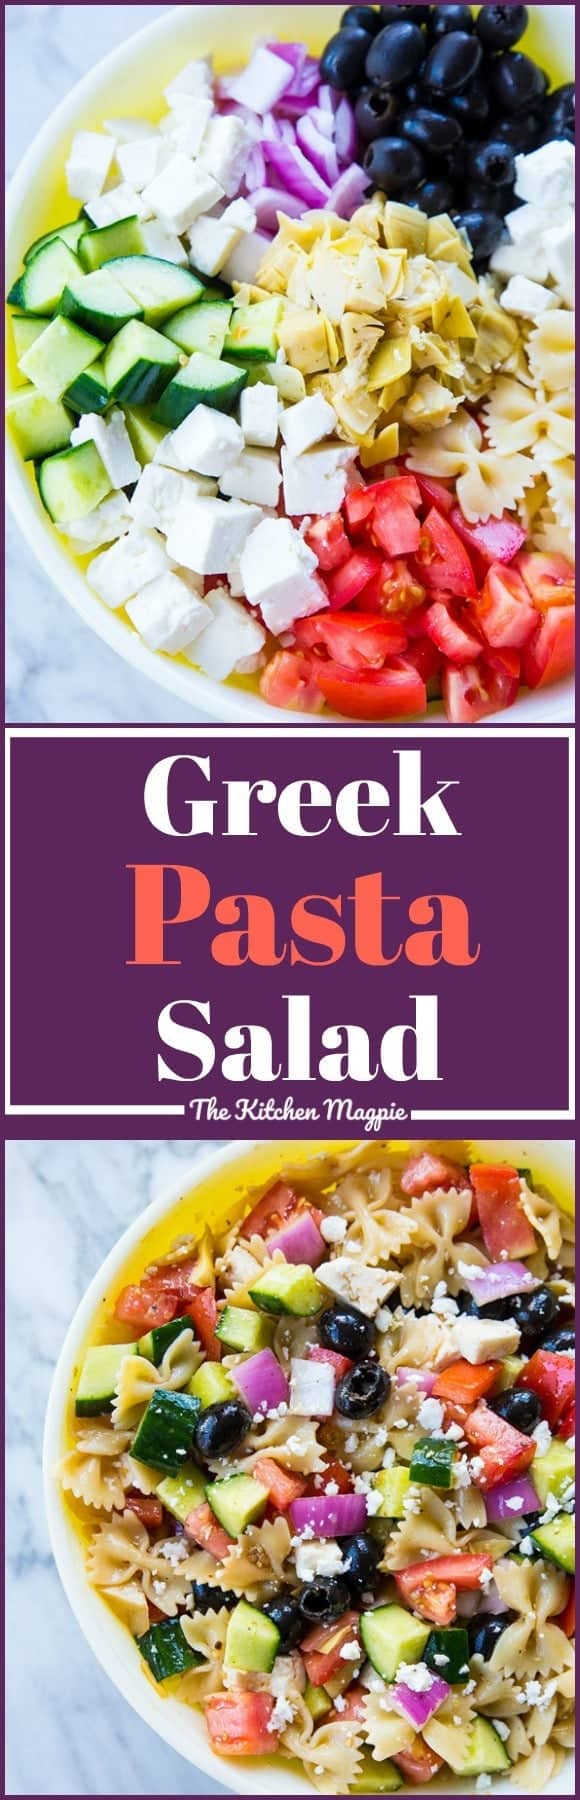 Fast & Easy Greek Pasta Salad - The Kitchen Magpie